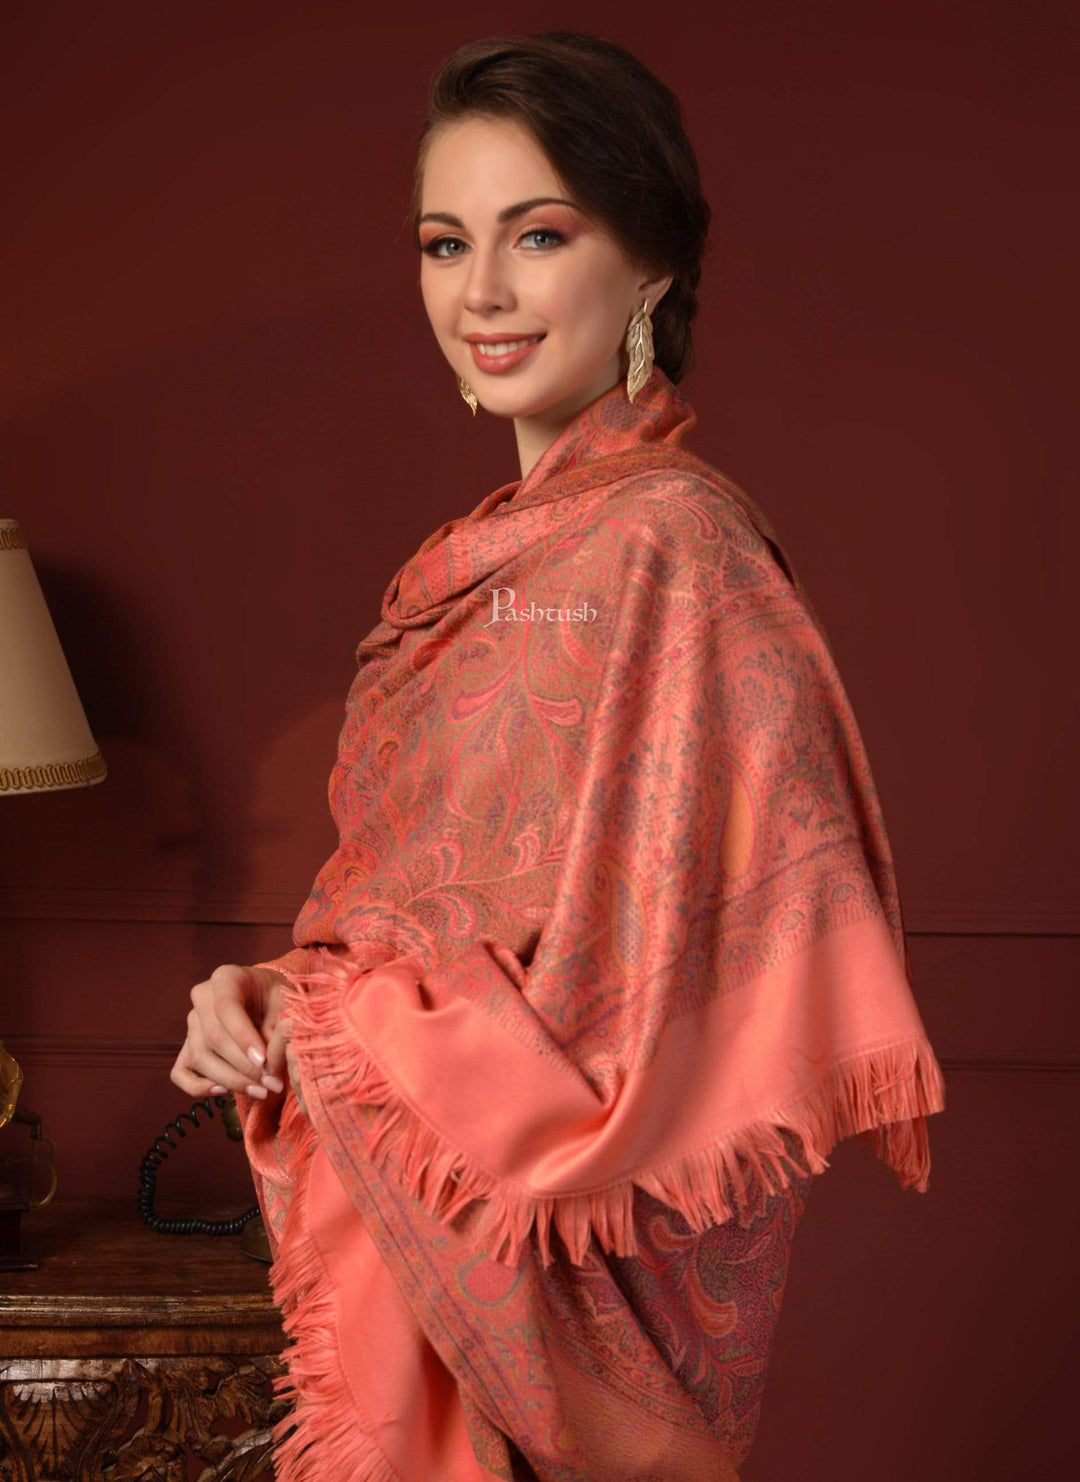 Pashtush India 100x200 Pashtush Womens Kashmiri Design Jamawar Shawl, Soft and Warm, Peach